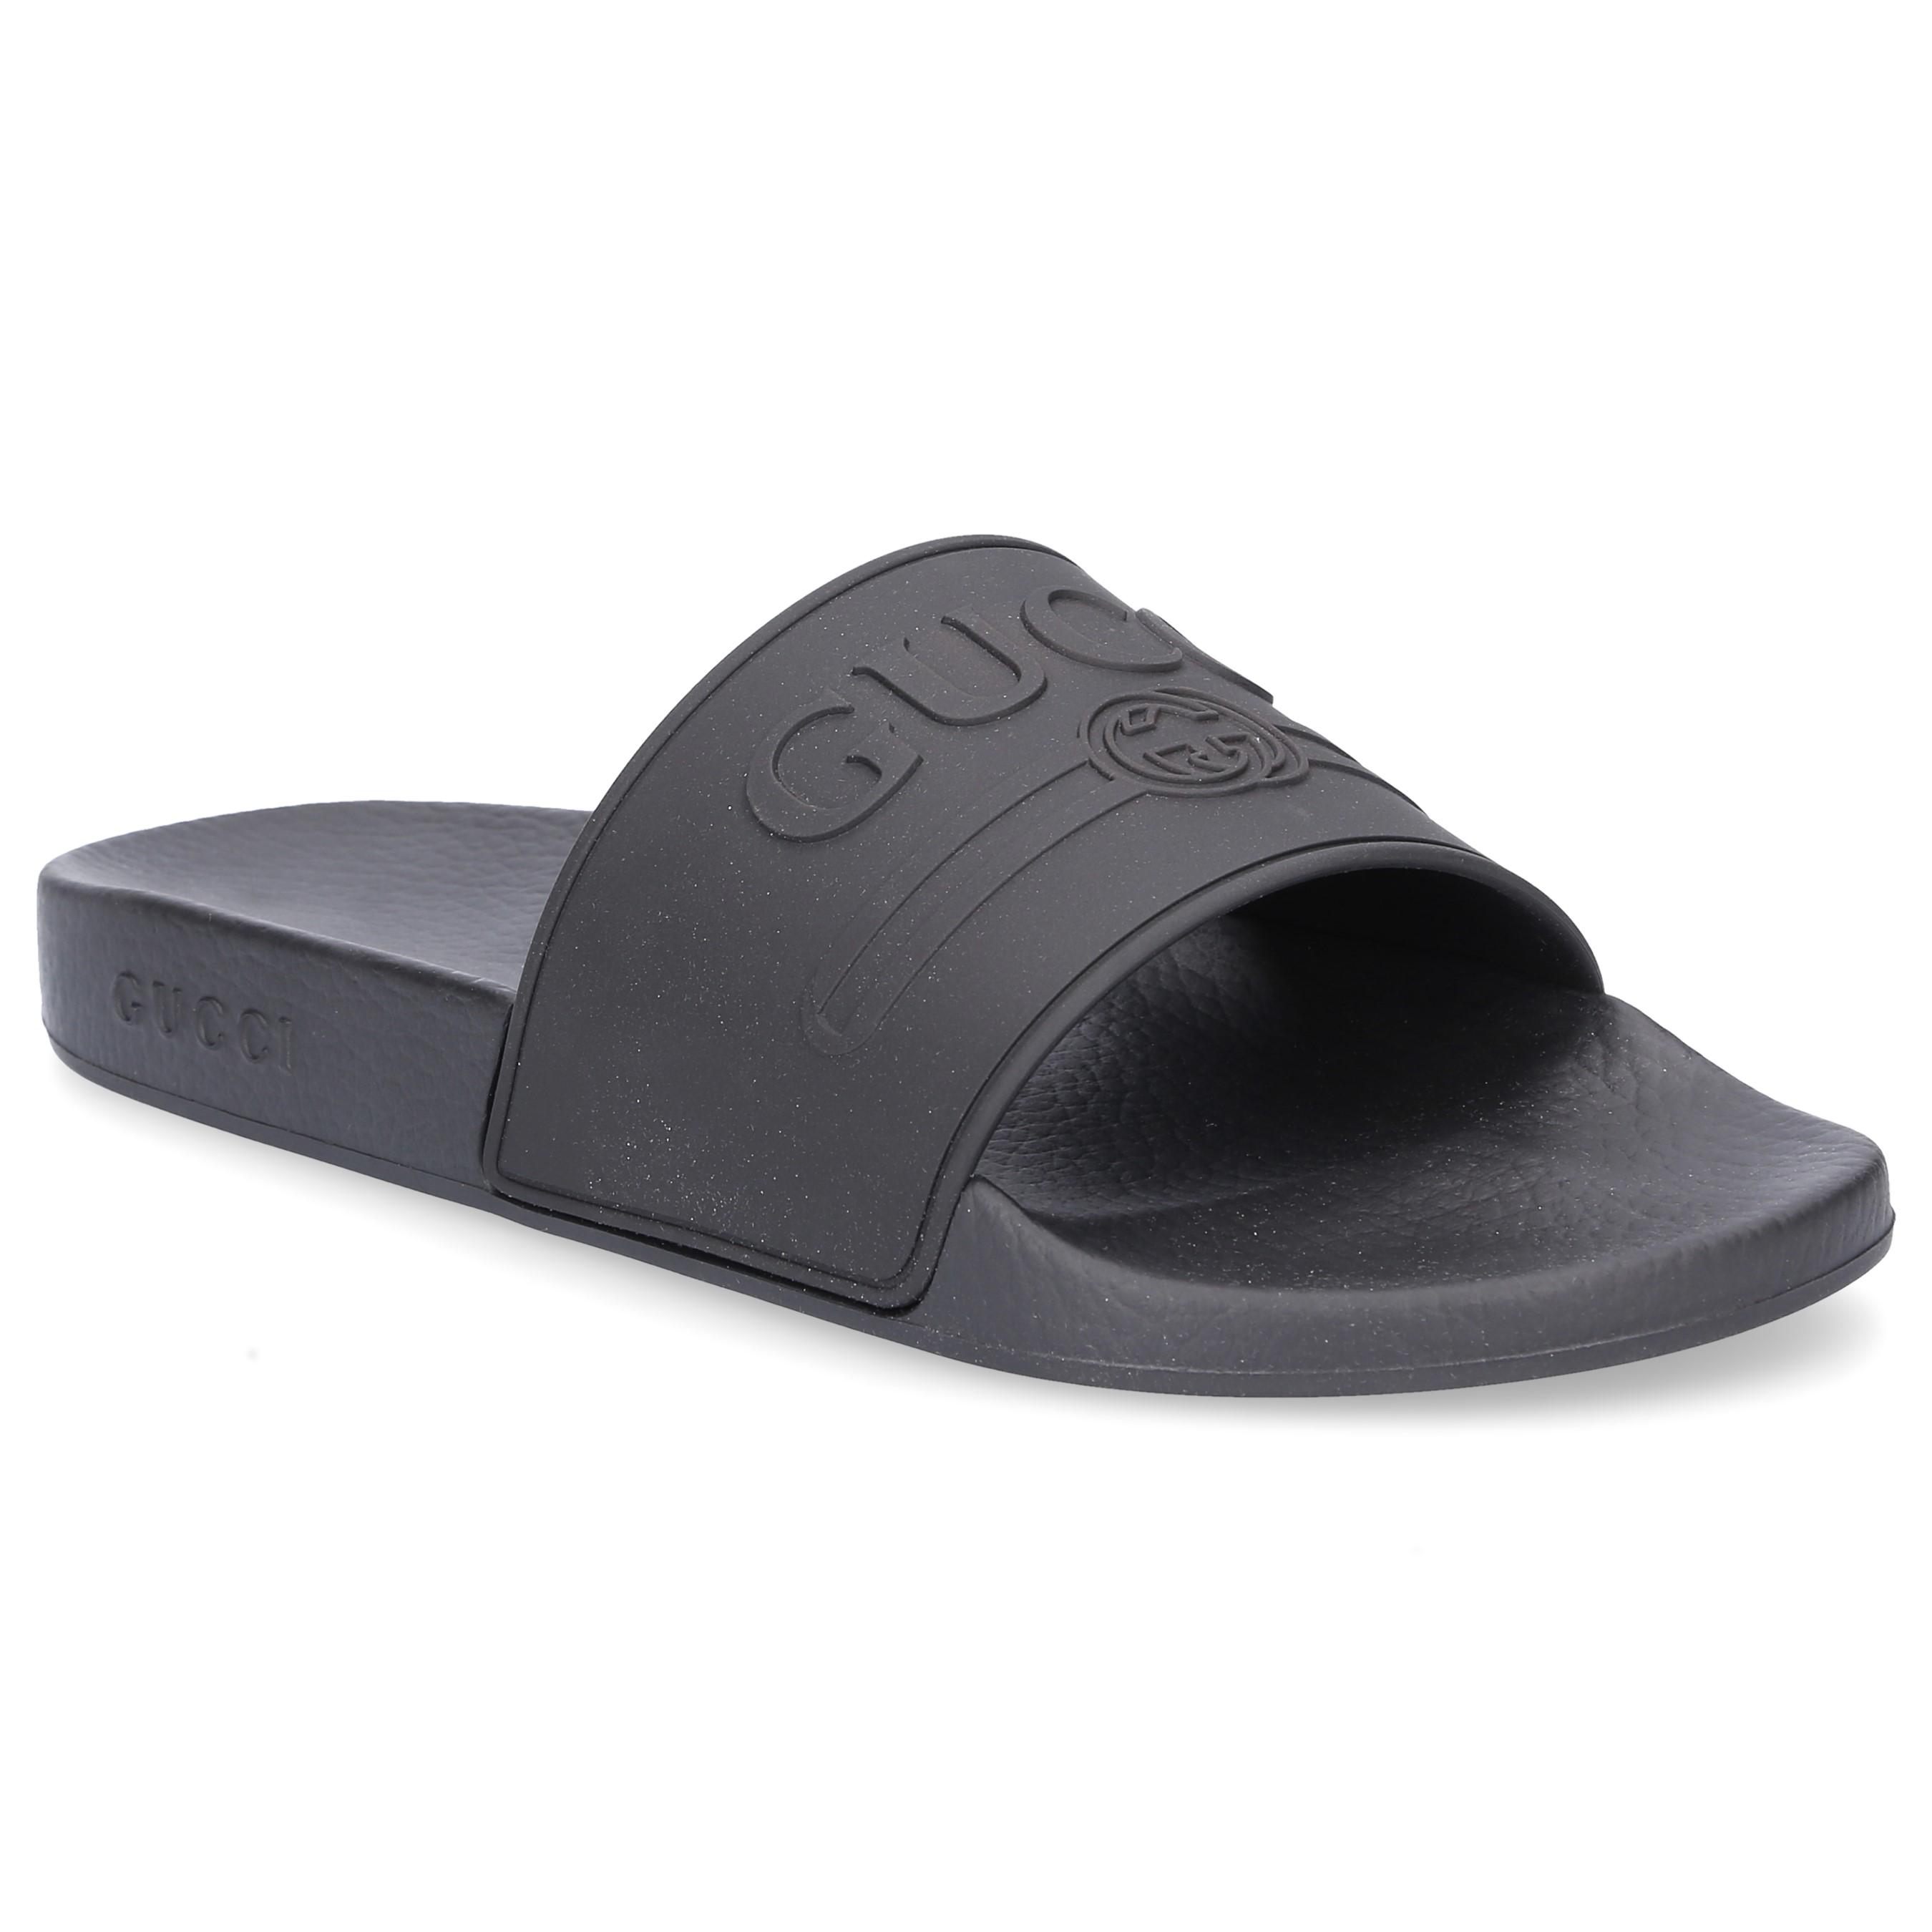 Gucci Beach Sandals 7jcz00 Gum Woven-details Black for Men - Lyst